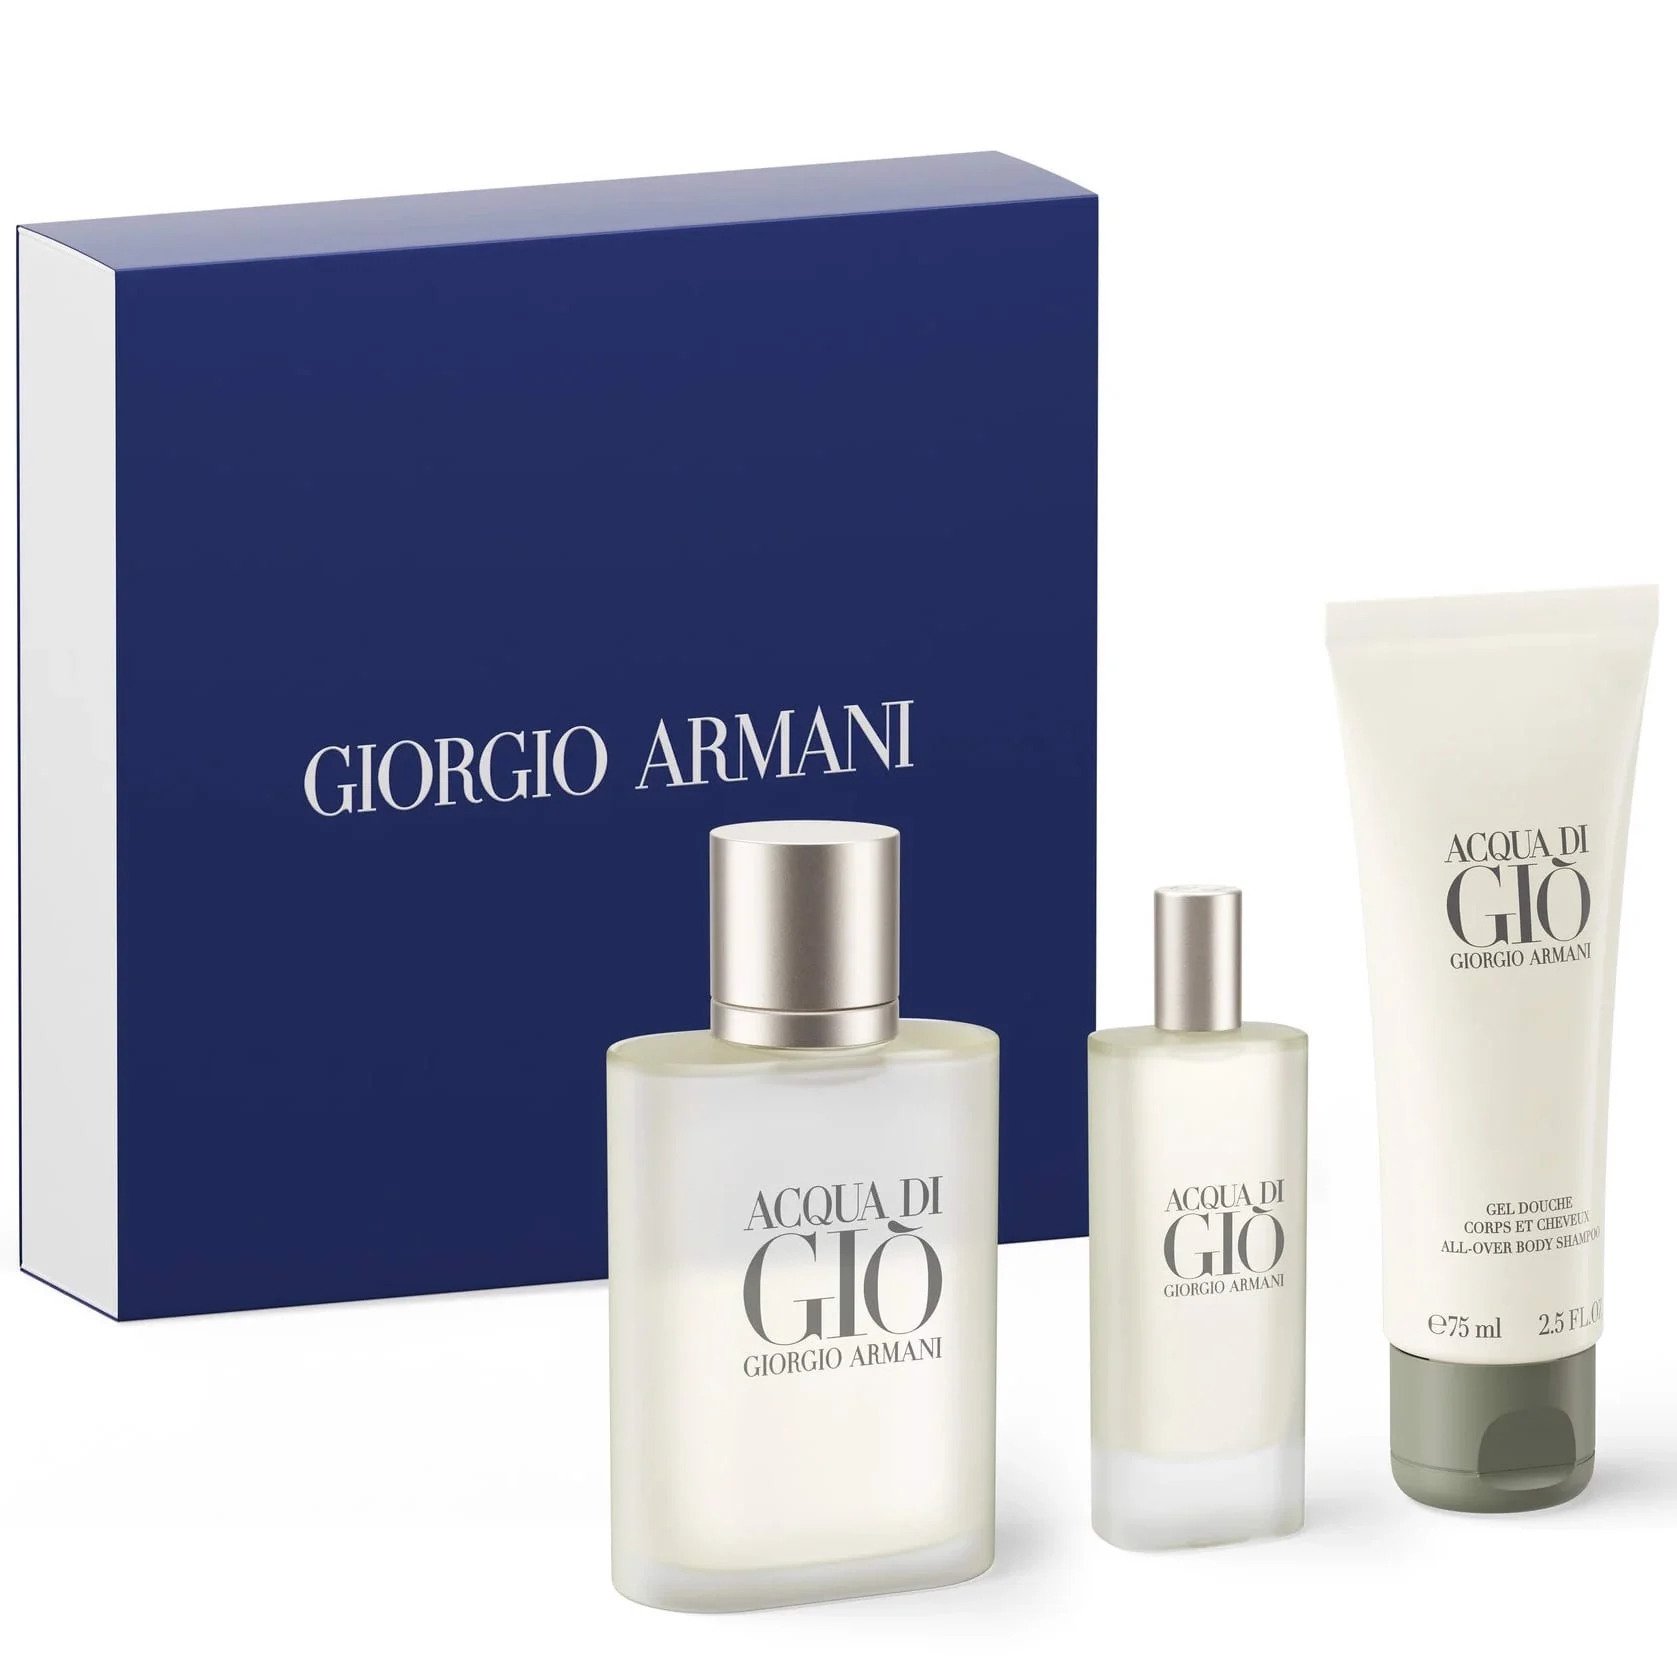 Giftset Giorgio Armani Acqua Di Gio - Nước hoa 100ml + Nước hoa 15ml + Tắm Gội Toàn Thân 75ml